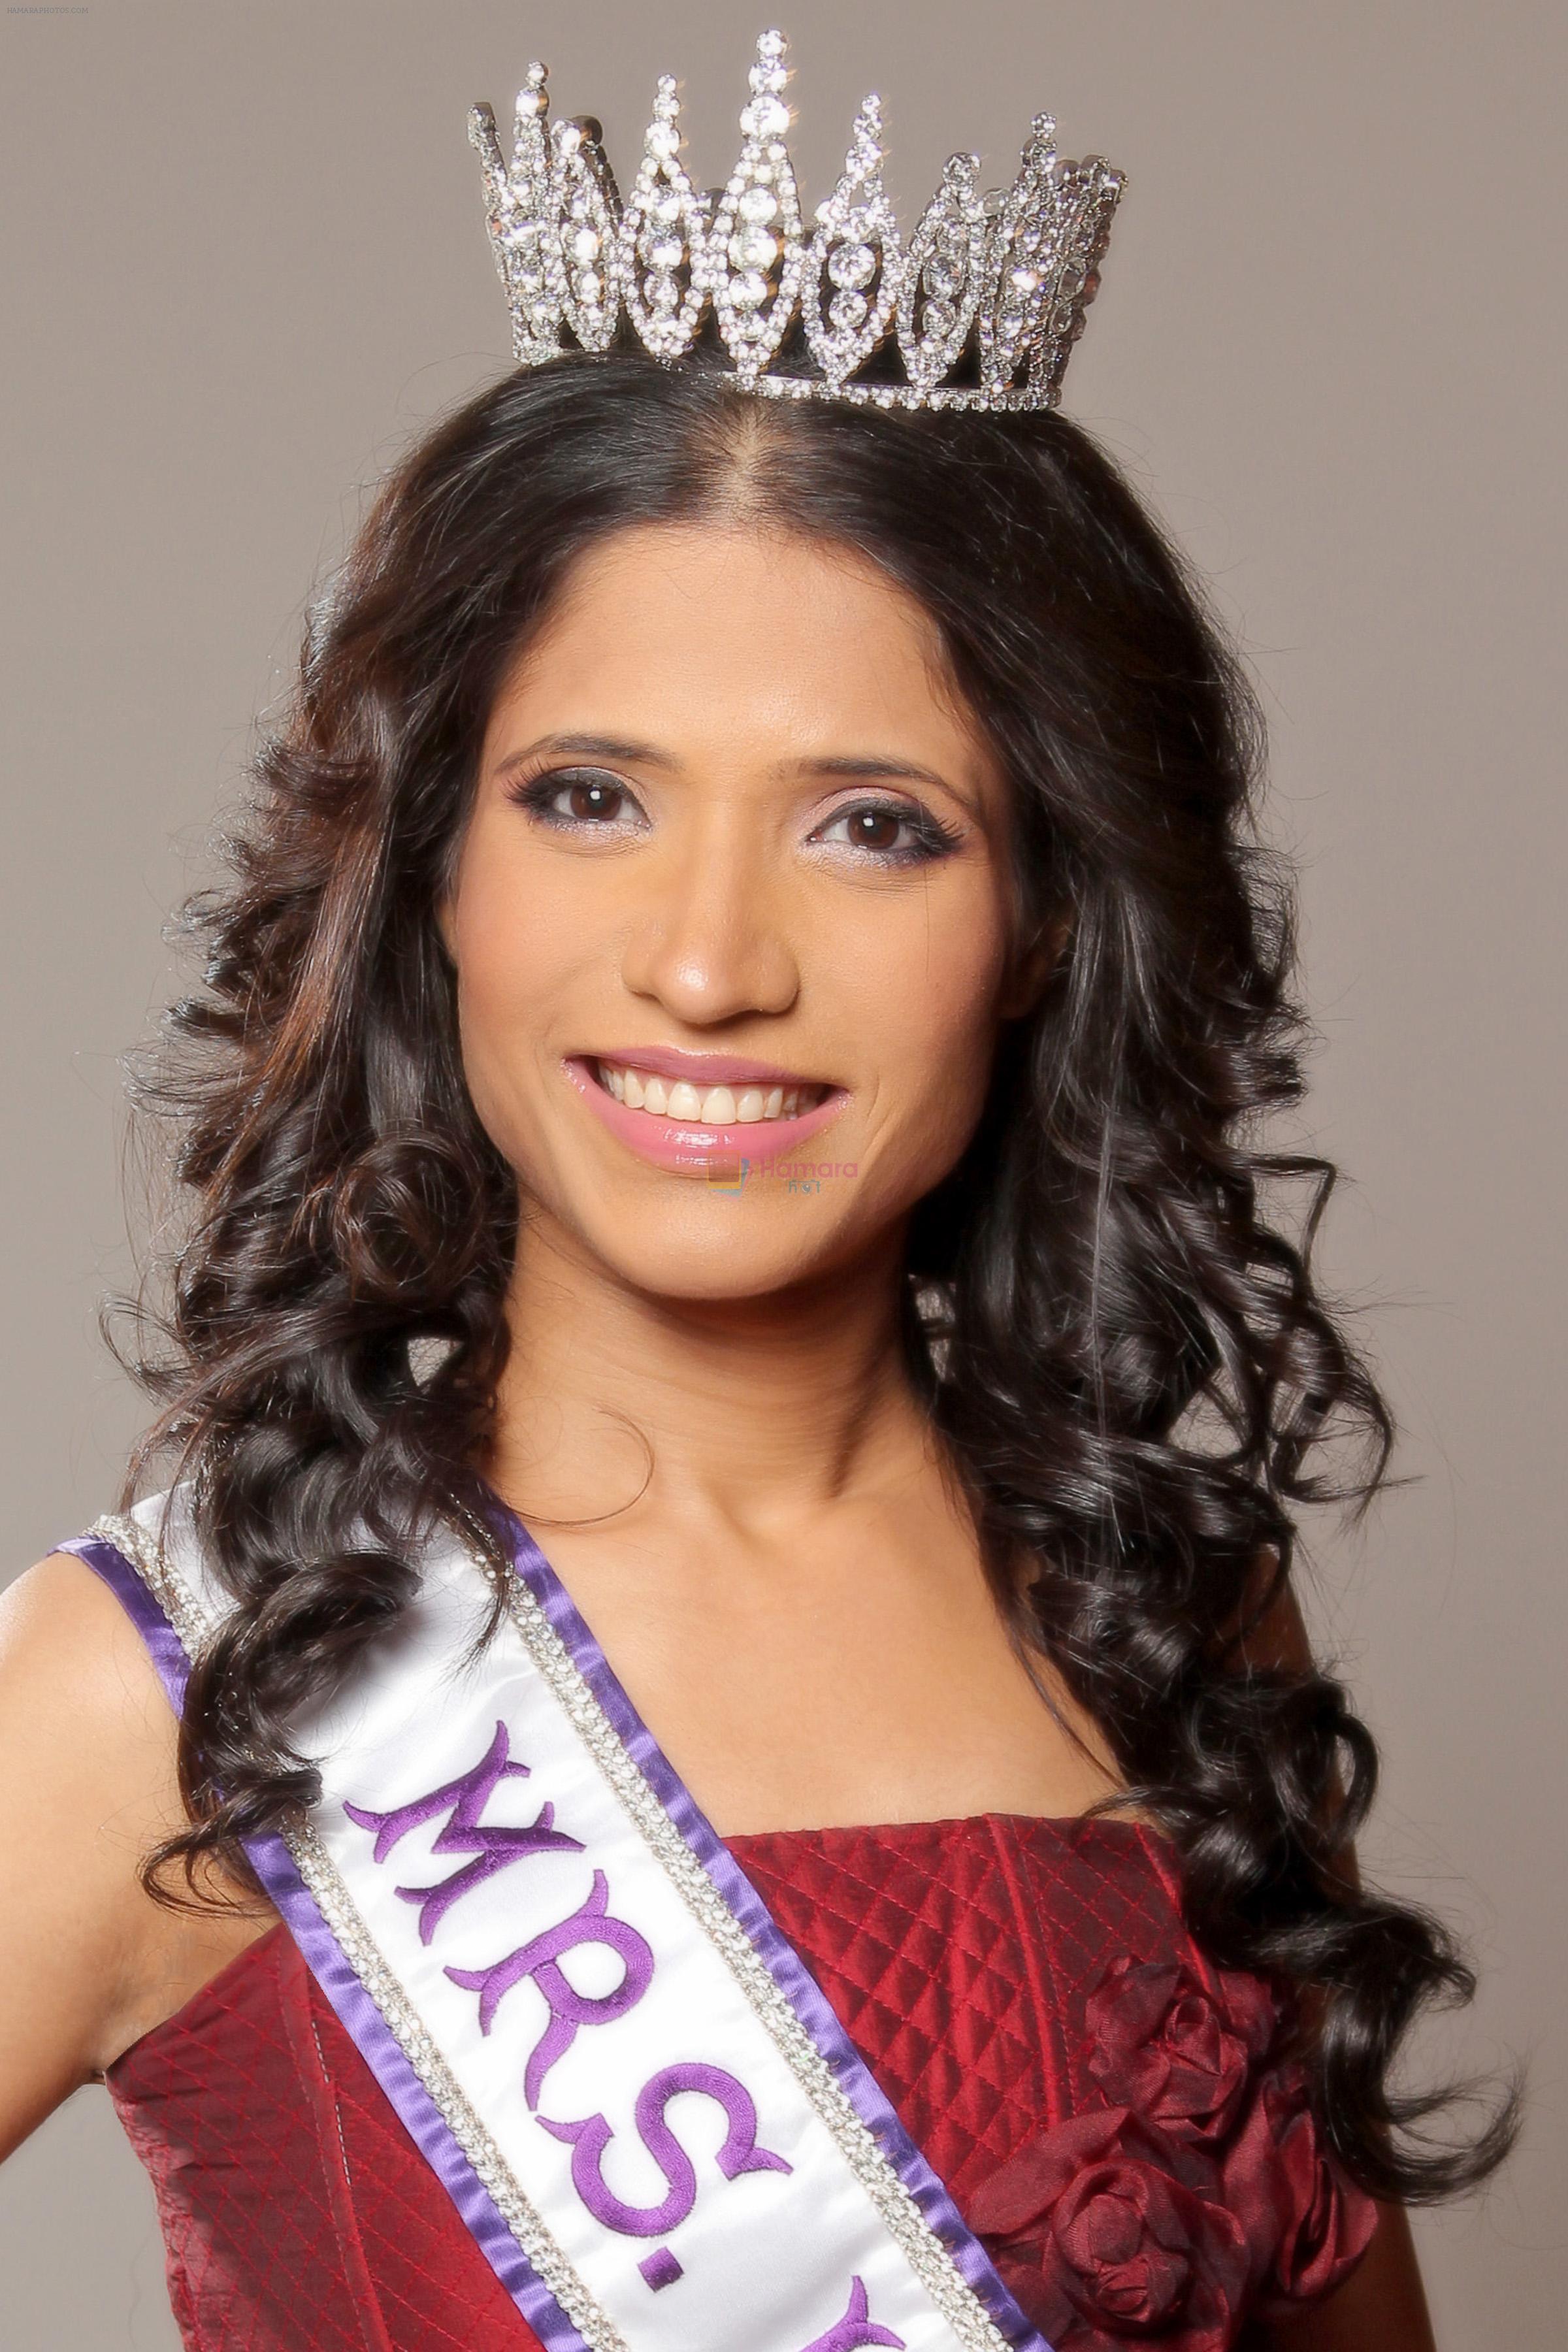 Richa Sharma is the  winner of Mrs India International 2011-12